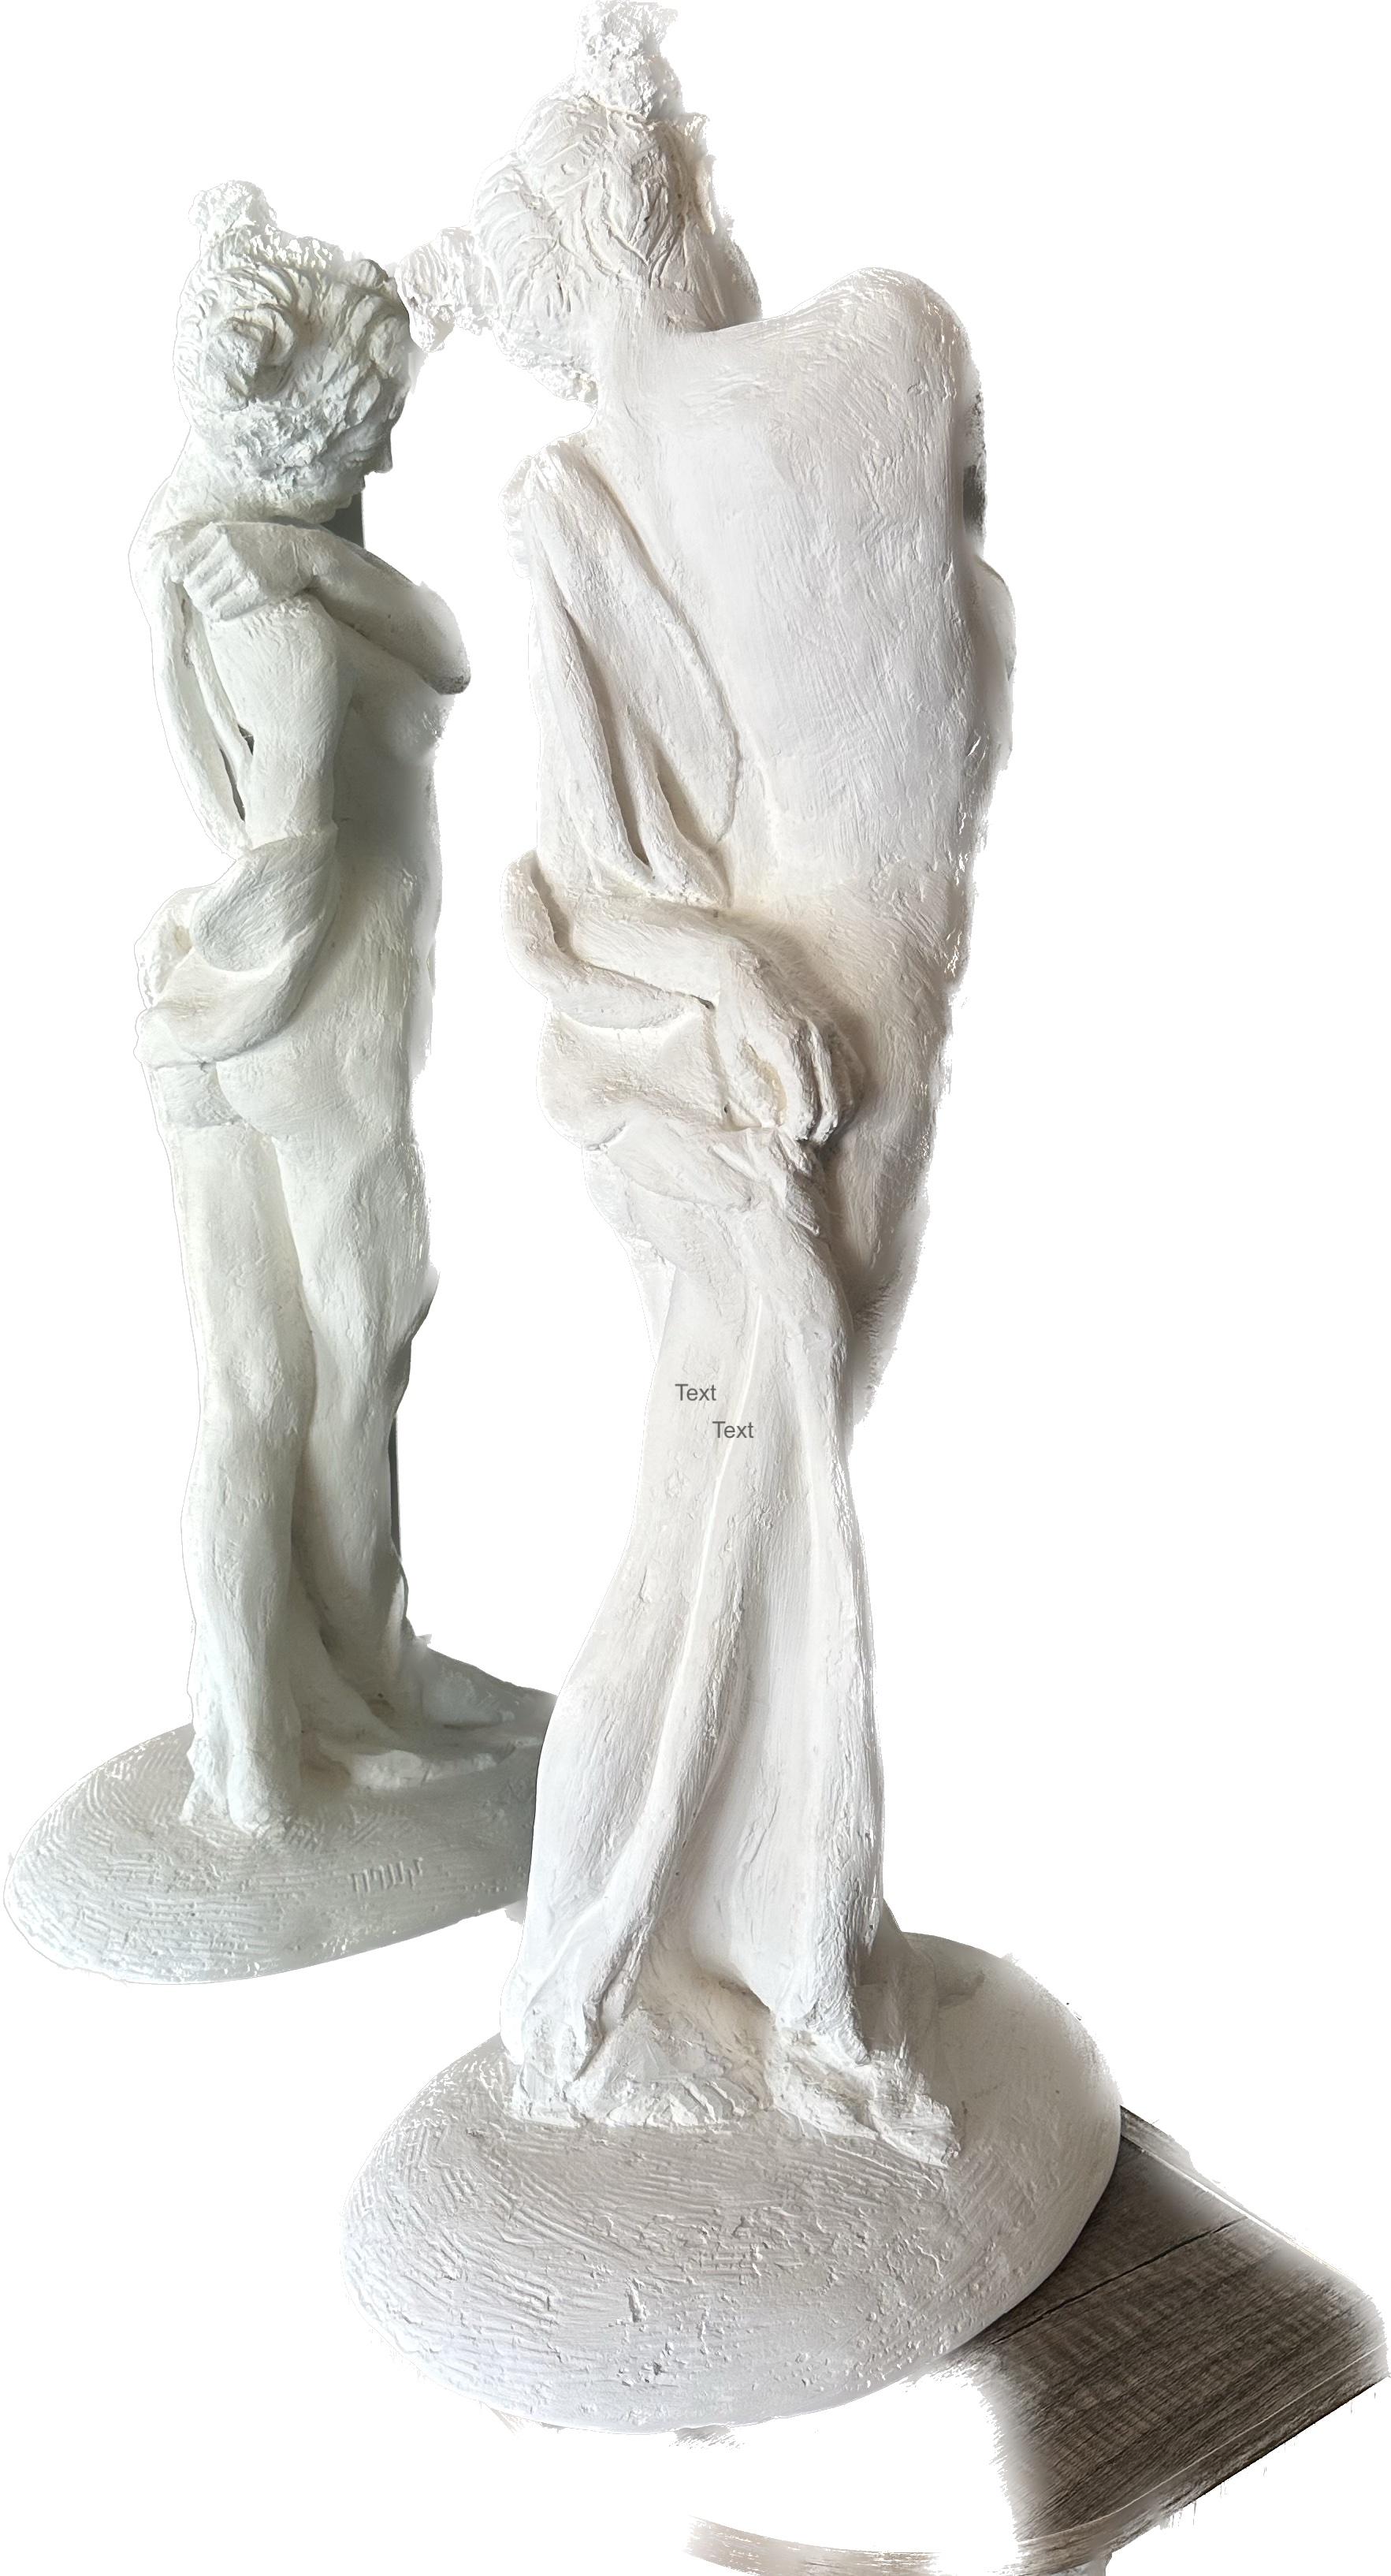 Standing Nude, Figure, Sculpture, Hydro Stone, Dust Marble Handmade by Garo - Gray Figurative Sculpture by Karapet Balakeseryan  (Garo)